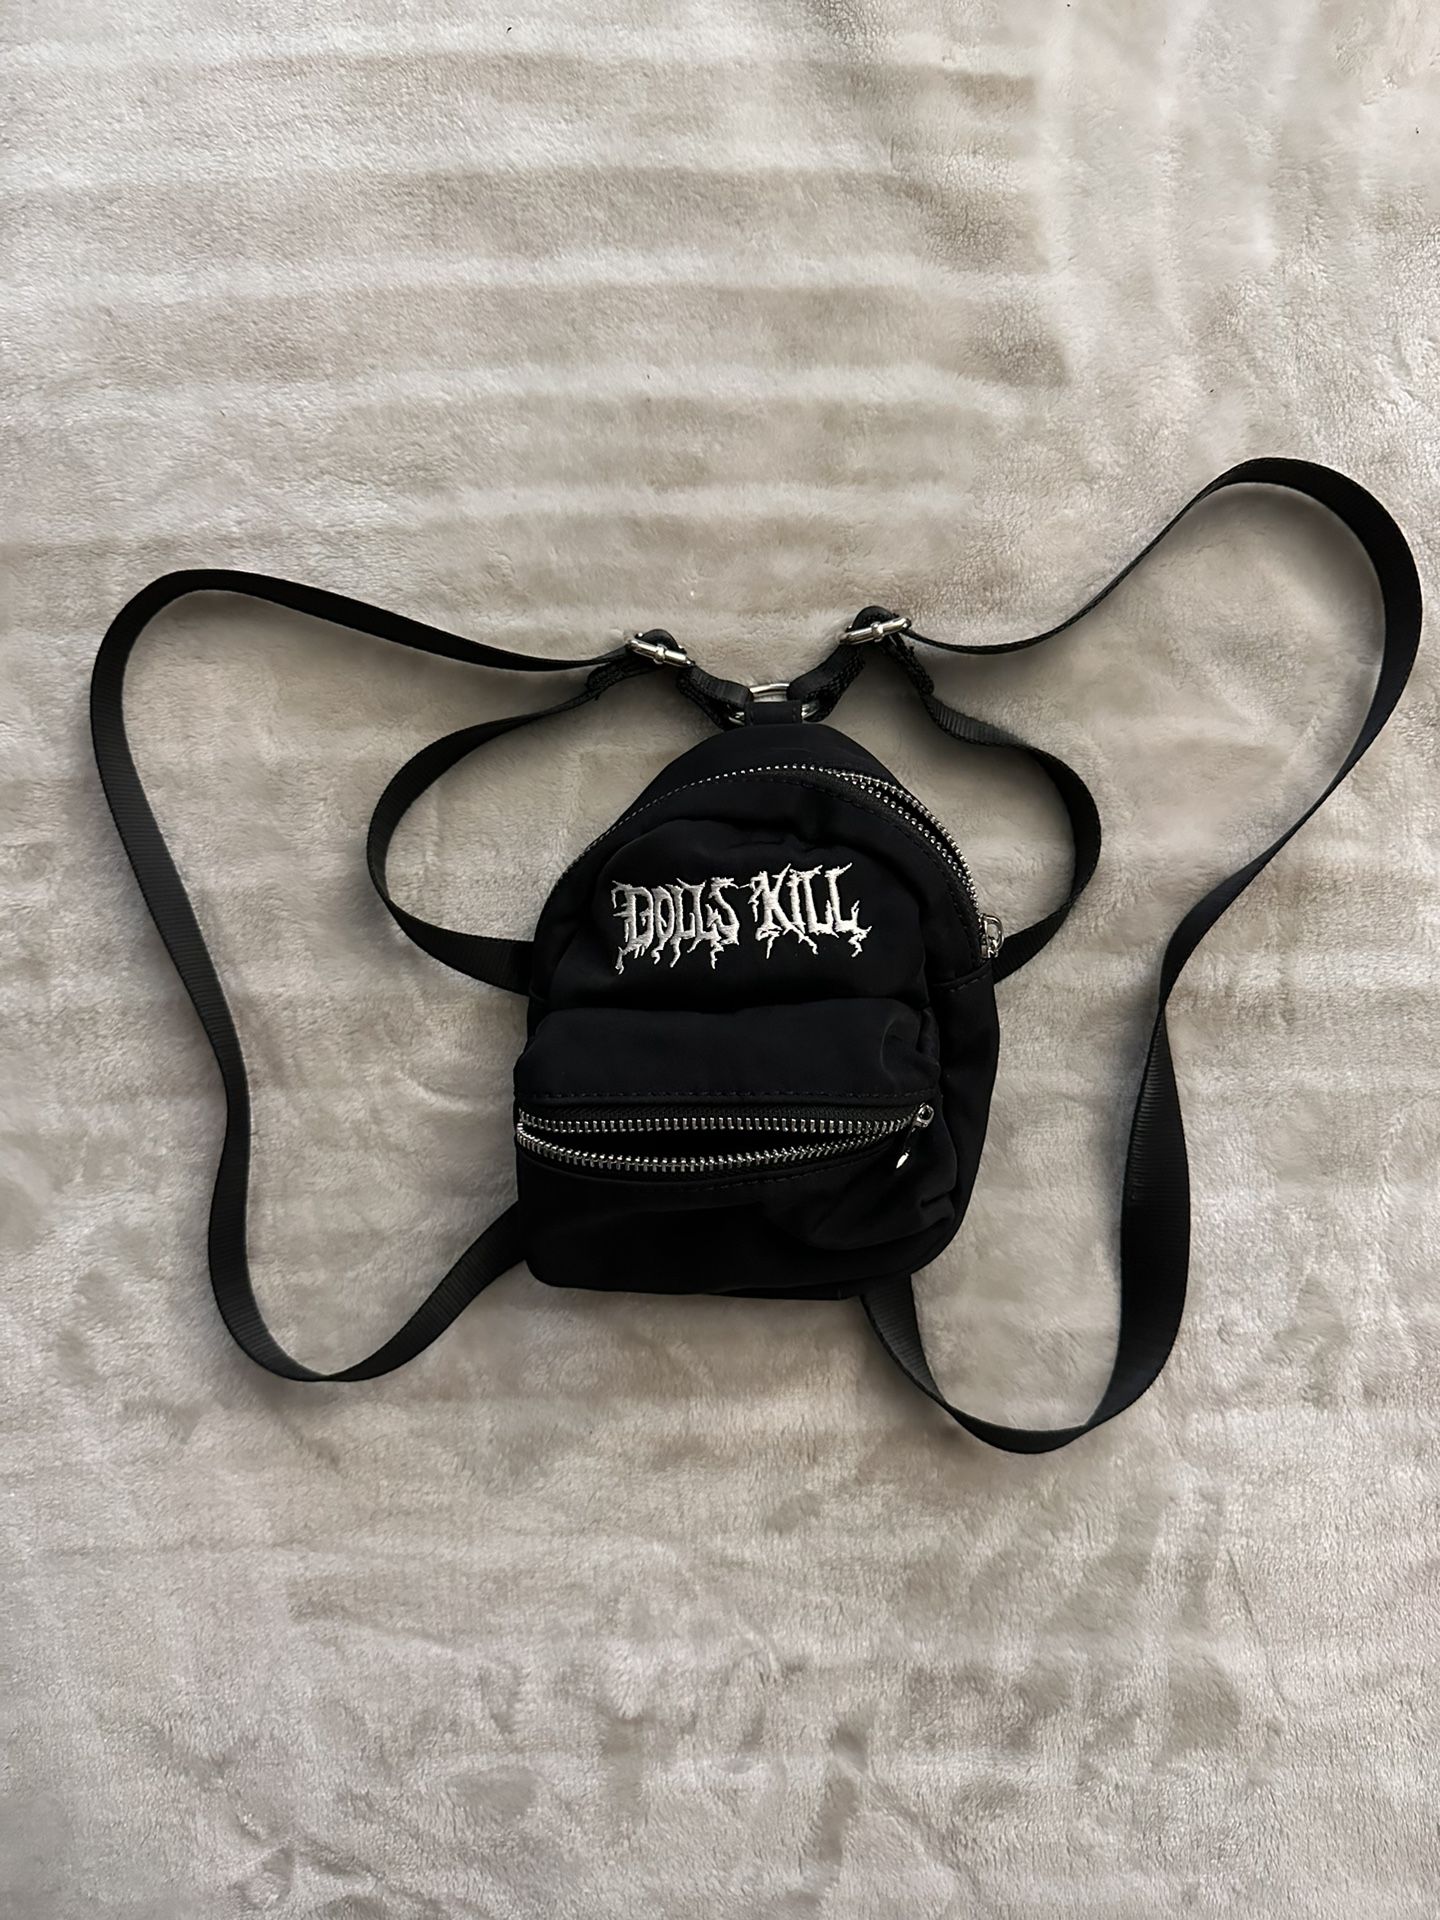 Dolls Kill Mini Backpack Black Nylon 6"H X 4"W Small Mini Back Pack